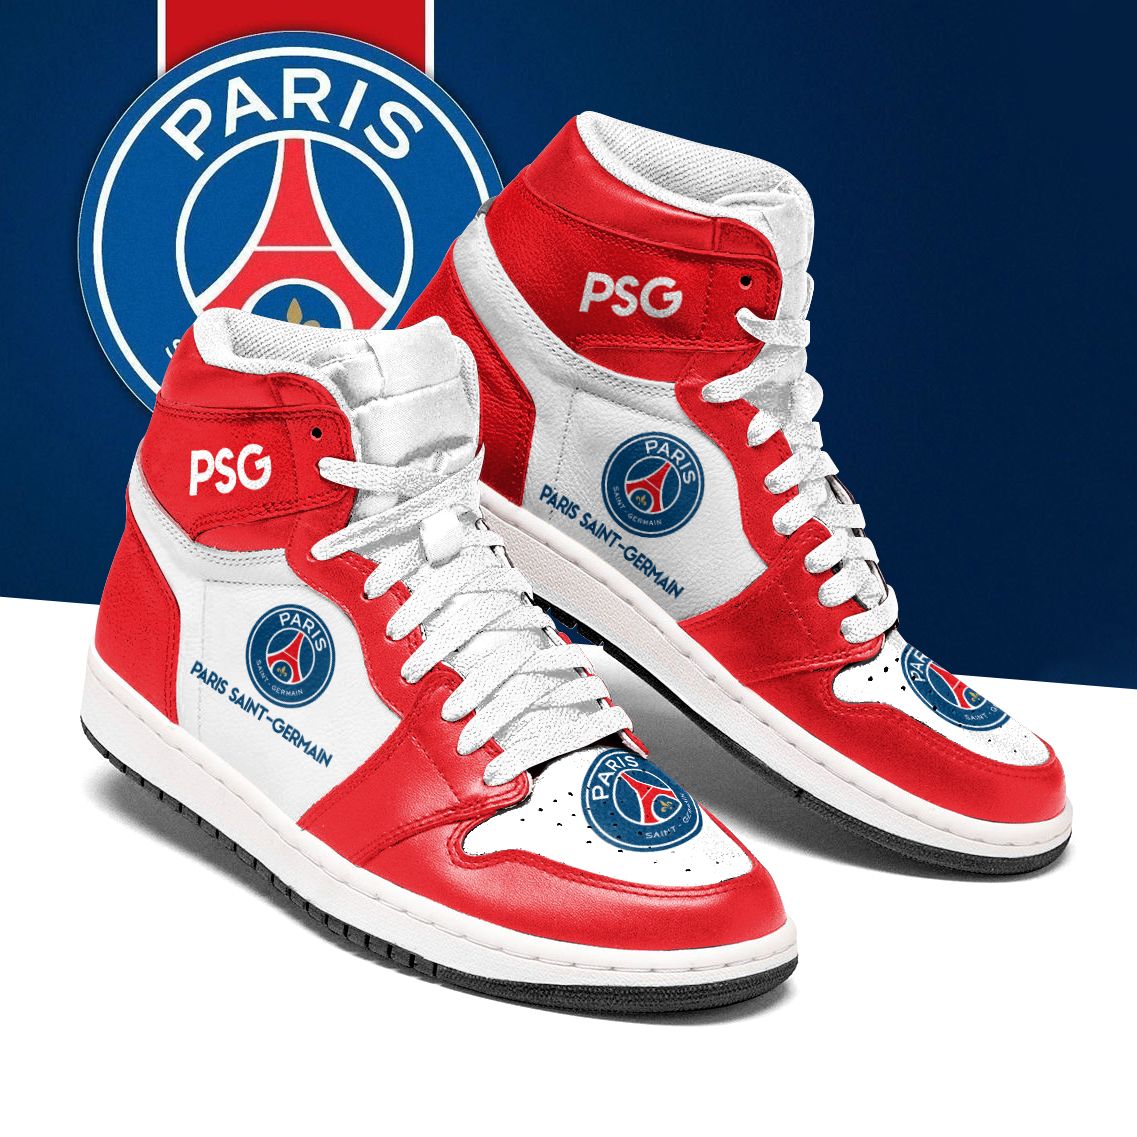 Paris Saint Germain air jordan high top shoes 1.2